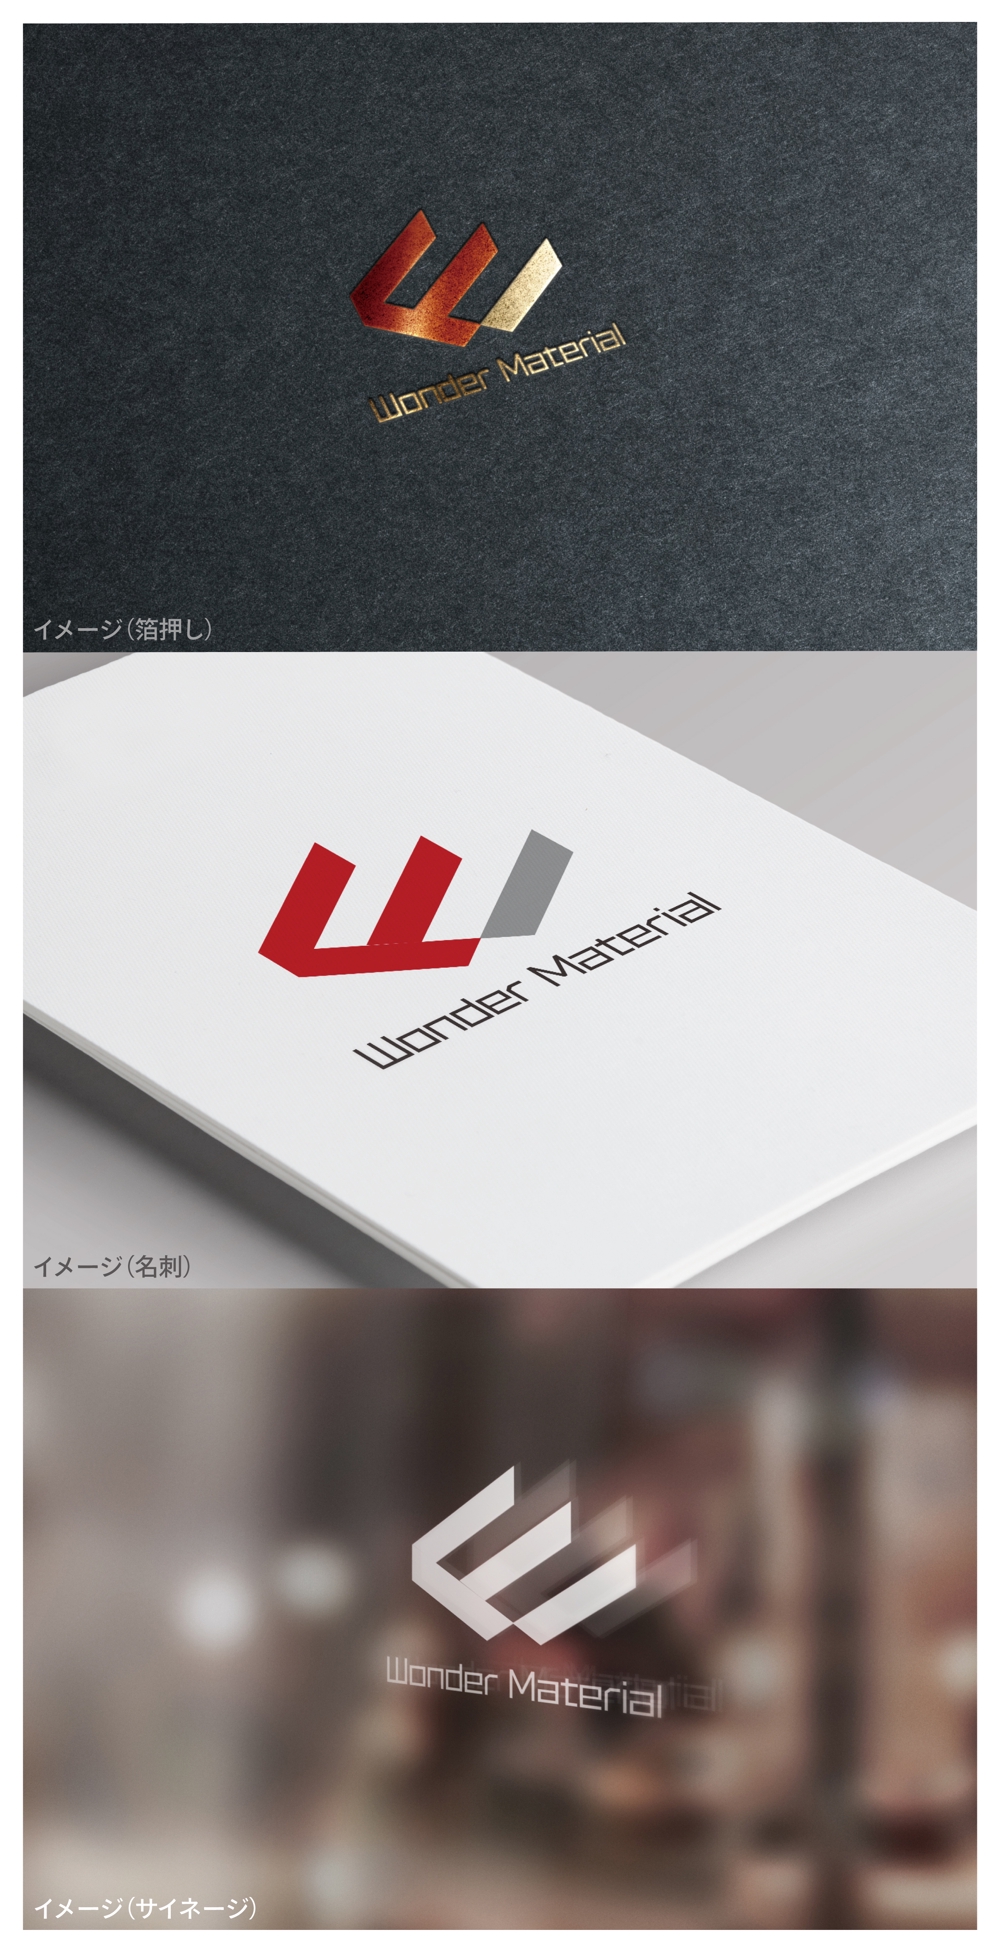 Wonder Material _logo02_01.jpg